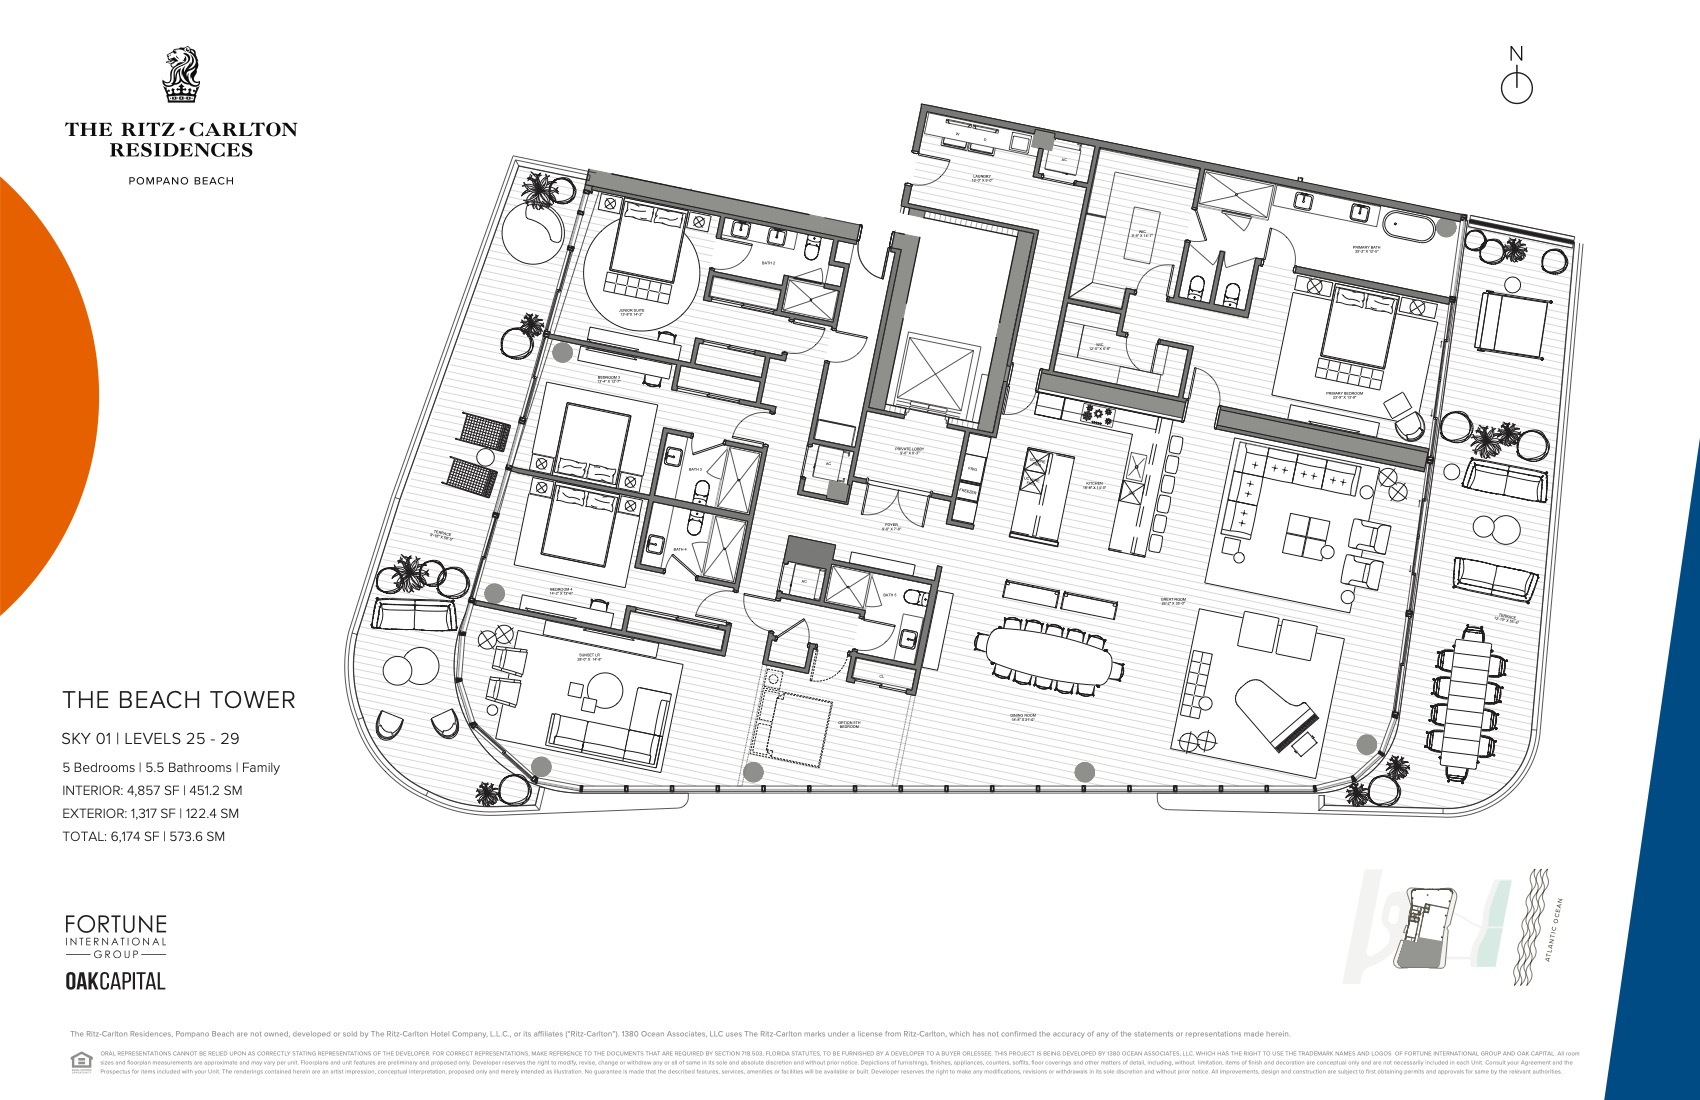 Floor Plan for The Ritz Carlton Pompano Floorplans, Beach Tower Sky 01